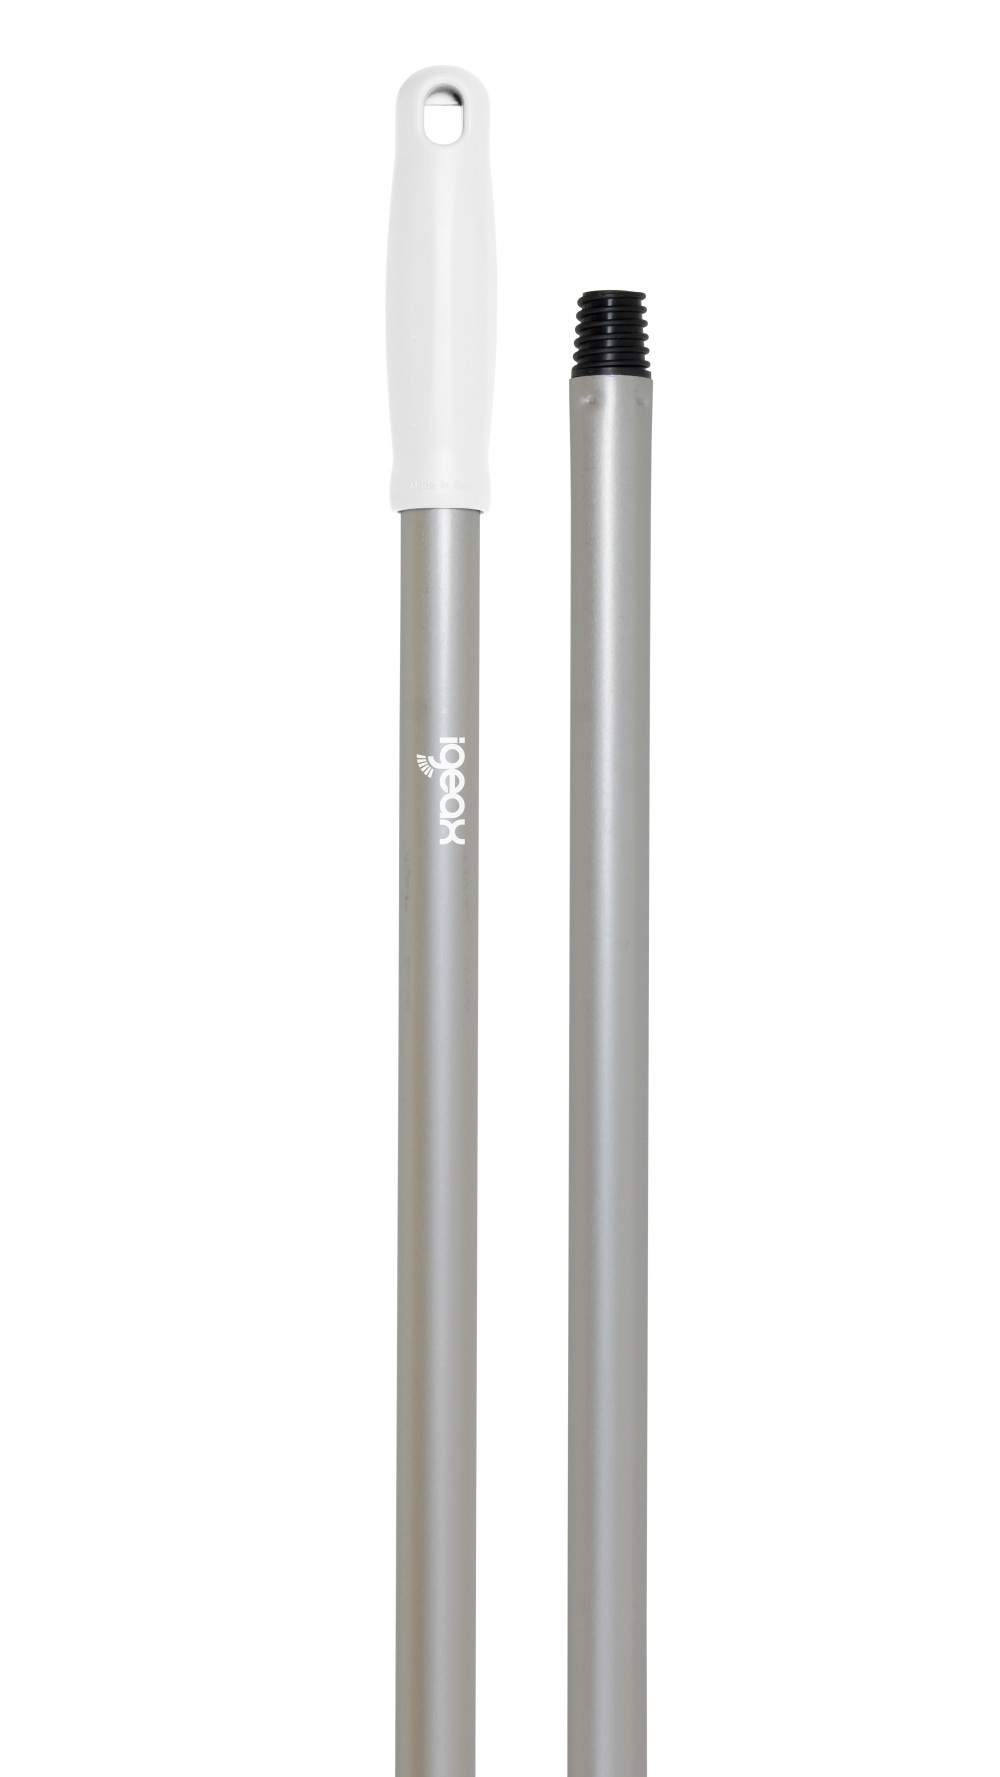 Igeax Aluminium nyél menetes 140cm-es 23,5 mm vastag fehér